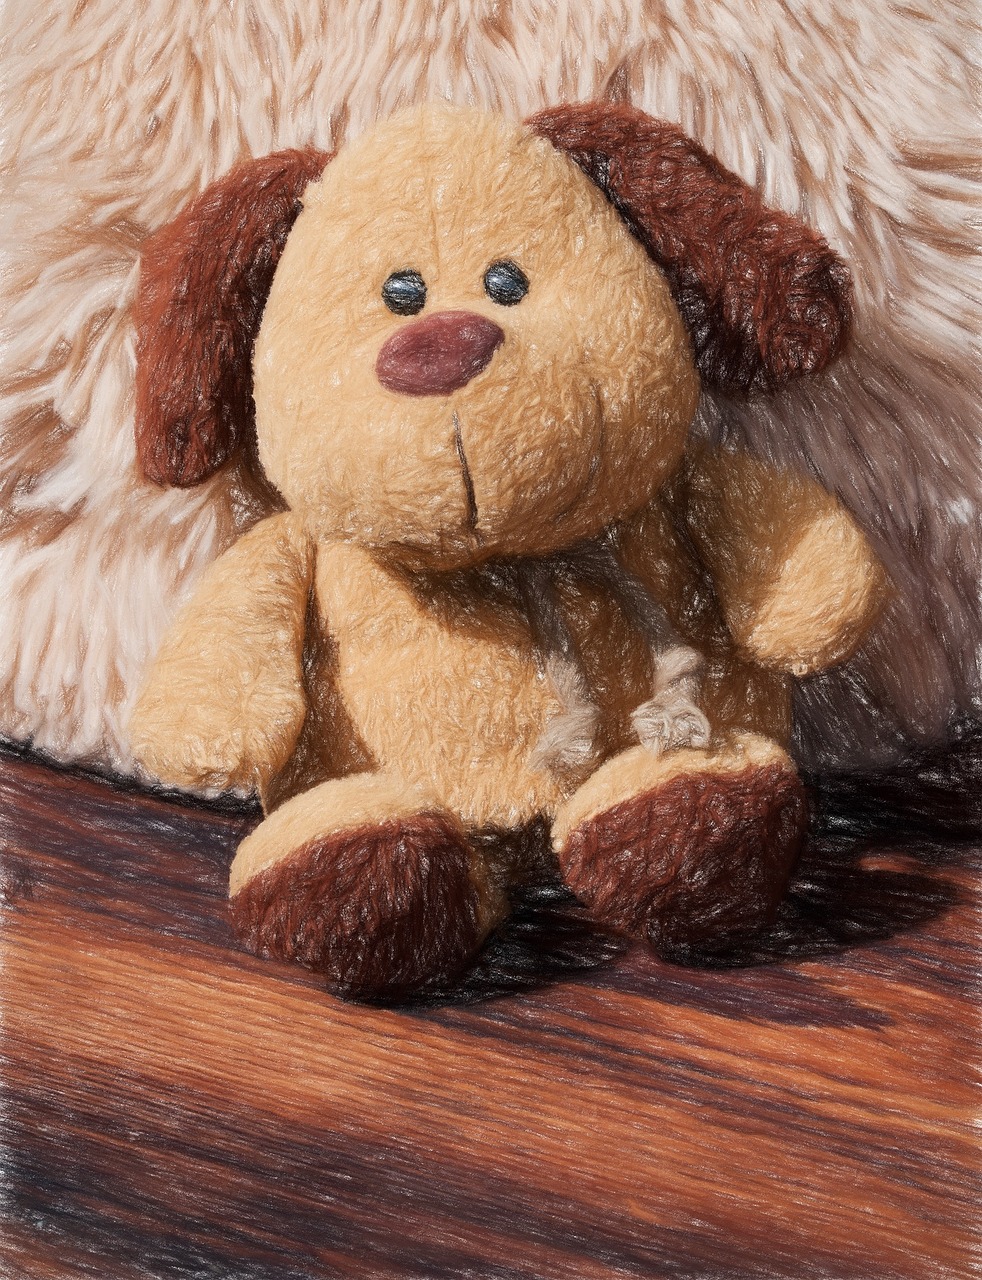 stuffed animal teddy bear fabric dog free photo